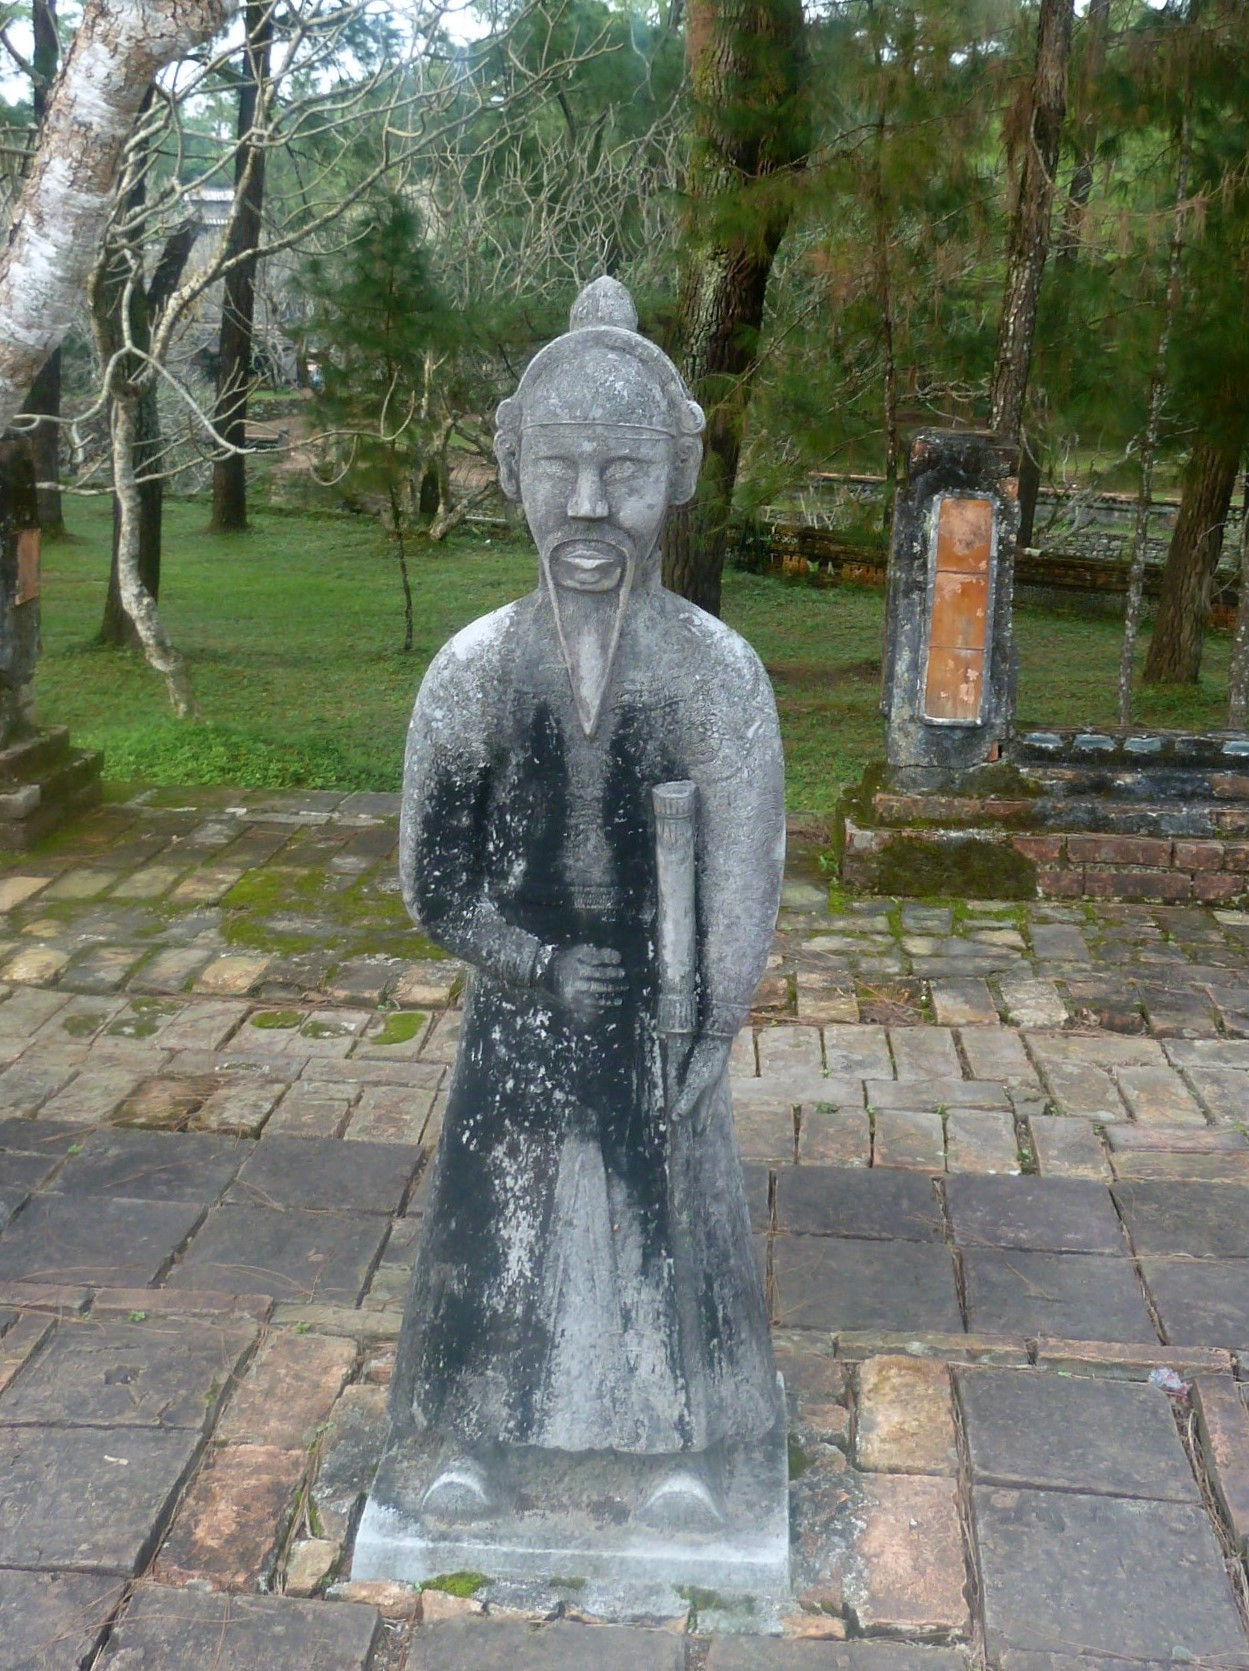 Stone statue of man